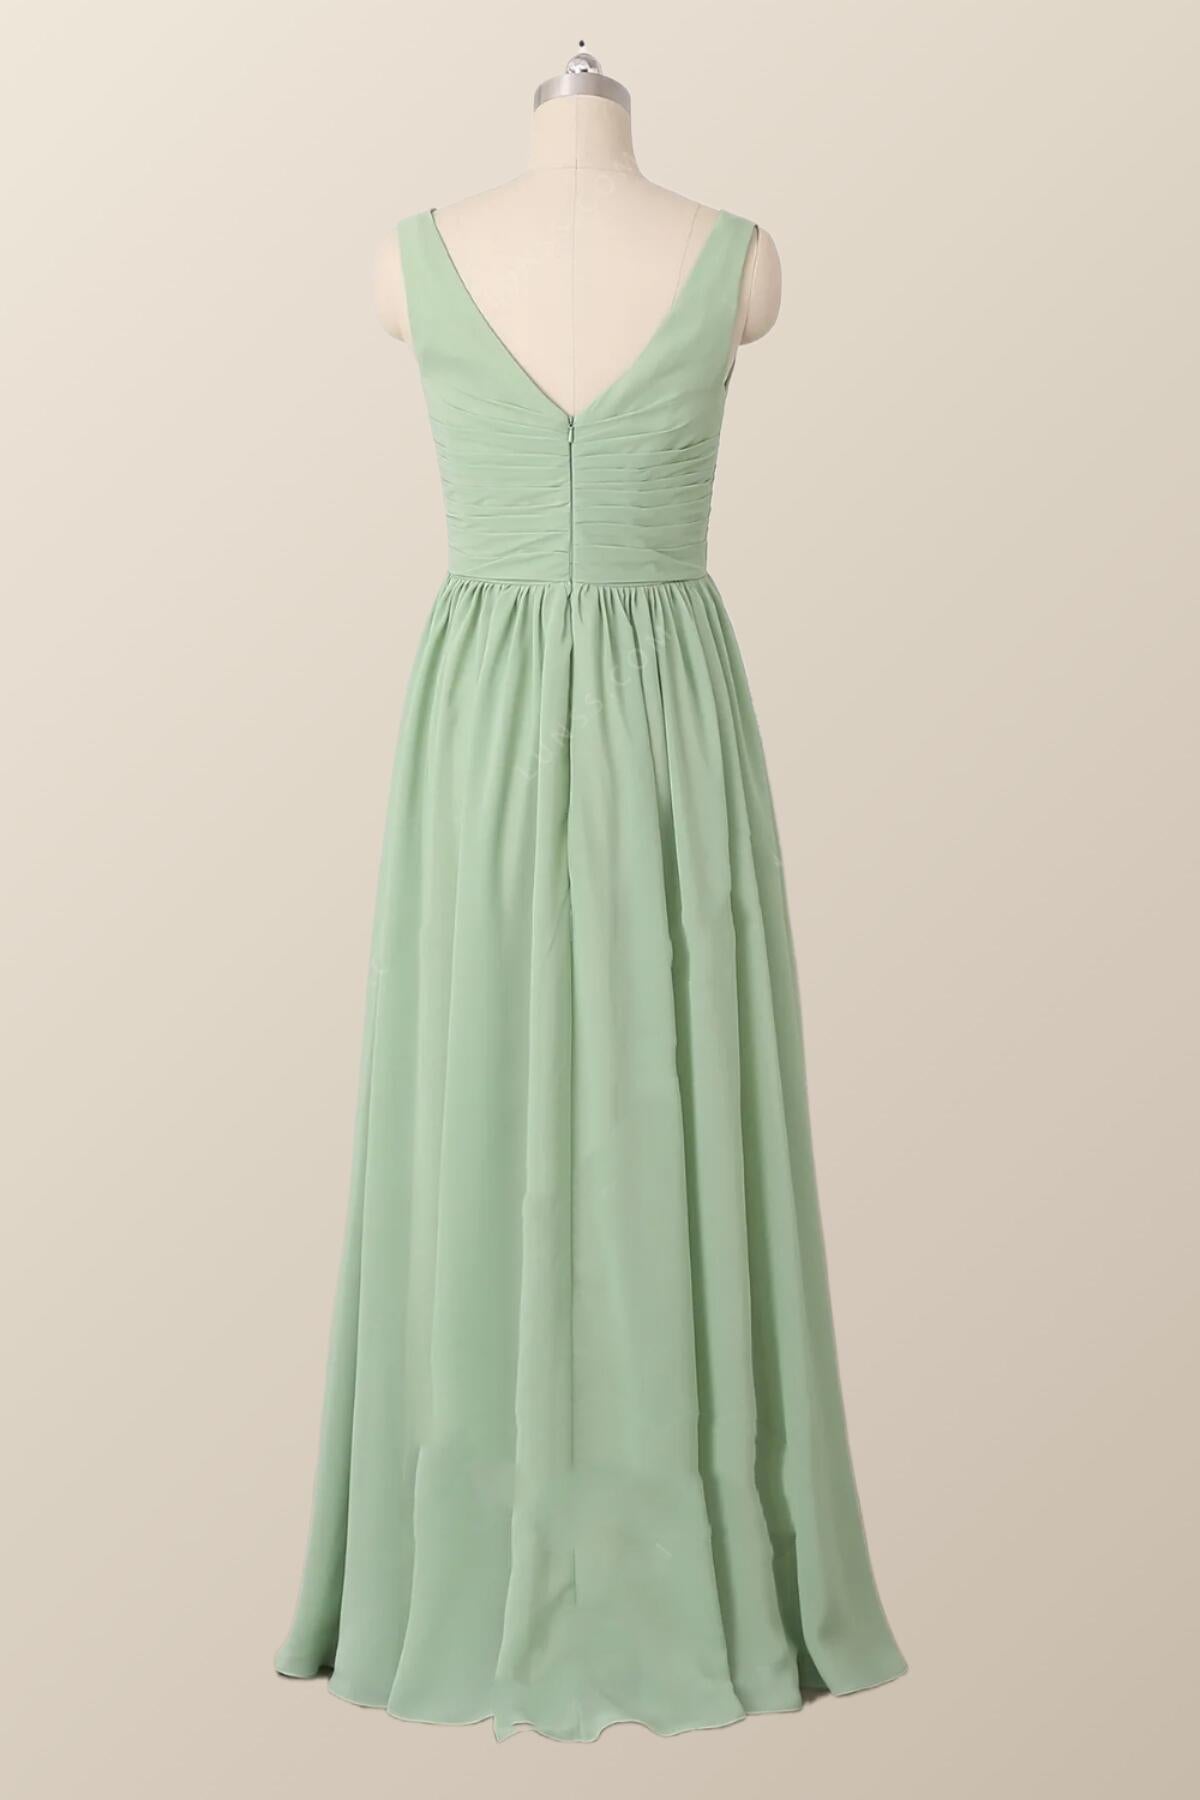 Pleated V Neck Mint Green Chiffon Bridesmaid Dress